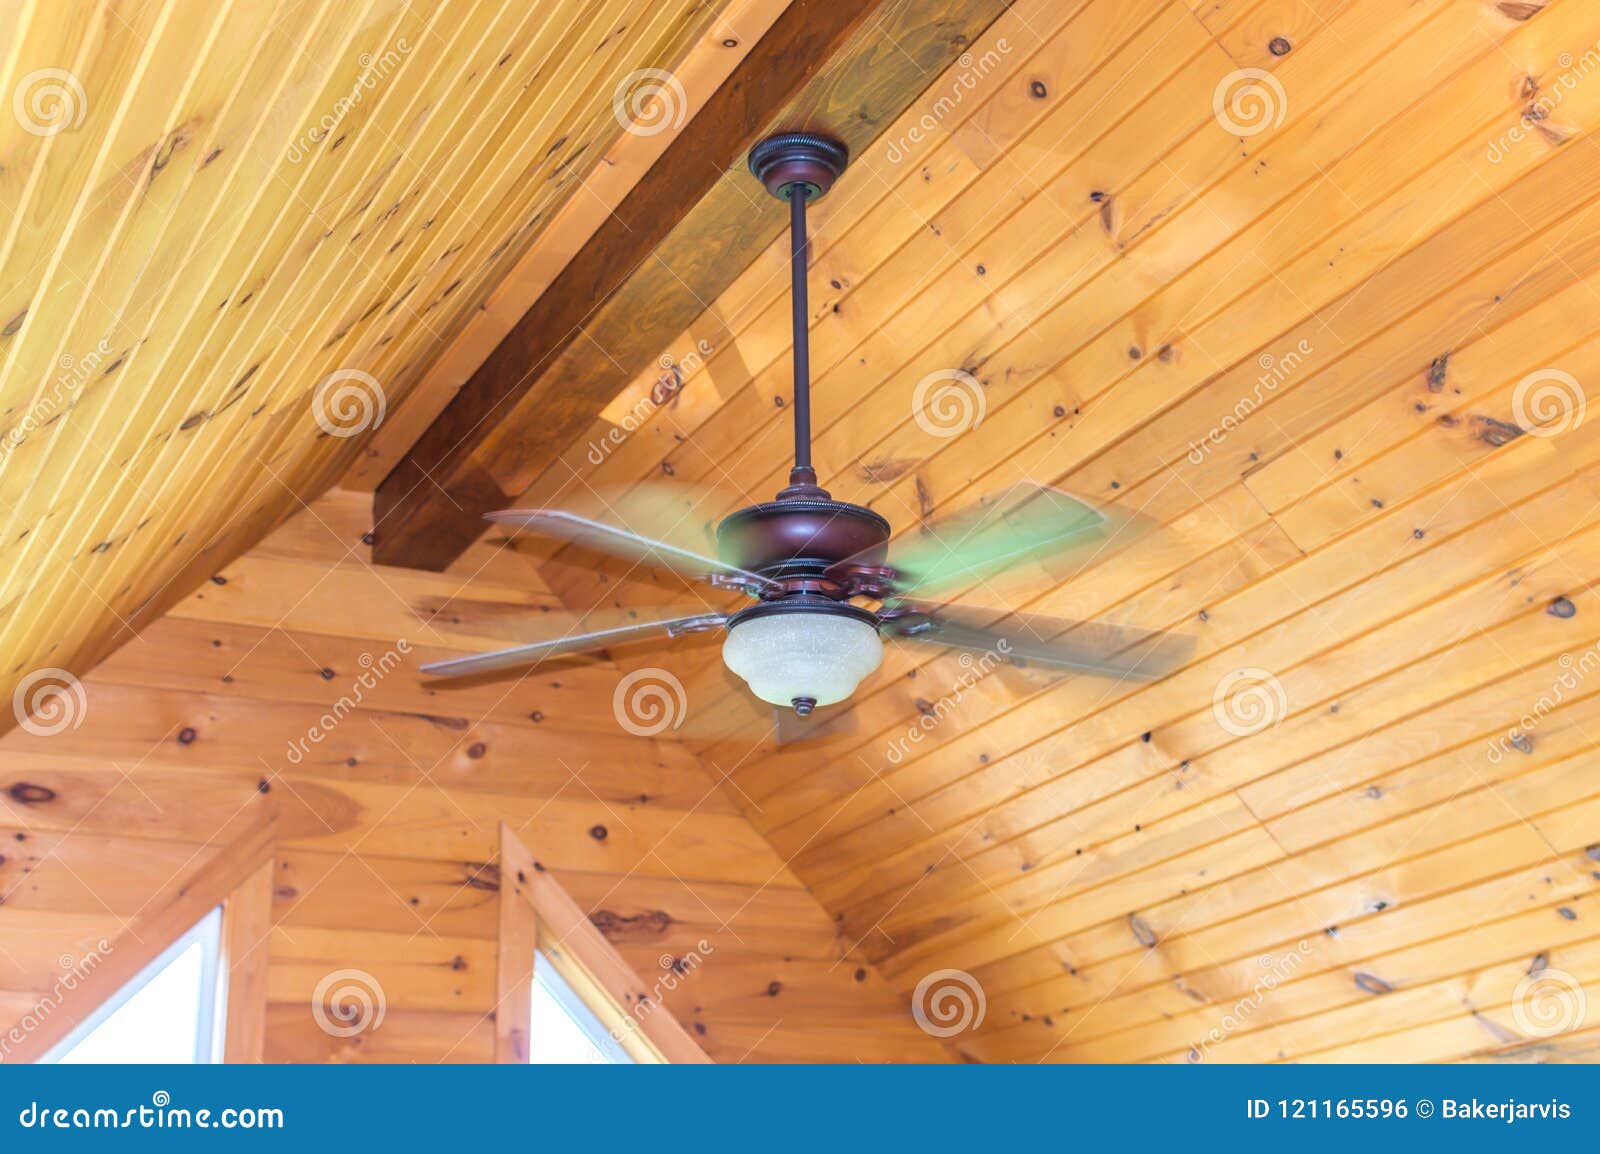 Fan Light On Ceiling Stock Photo Image Of Glass Appliance